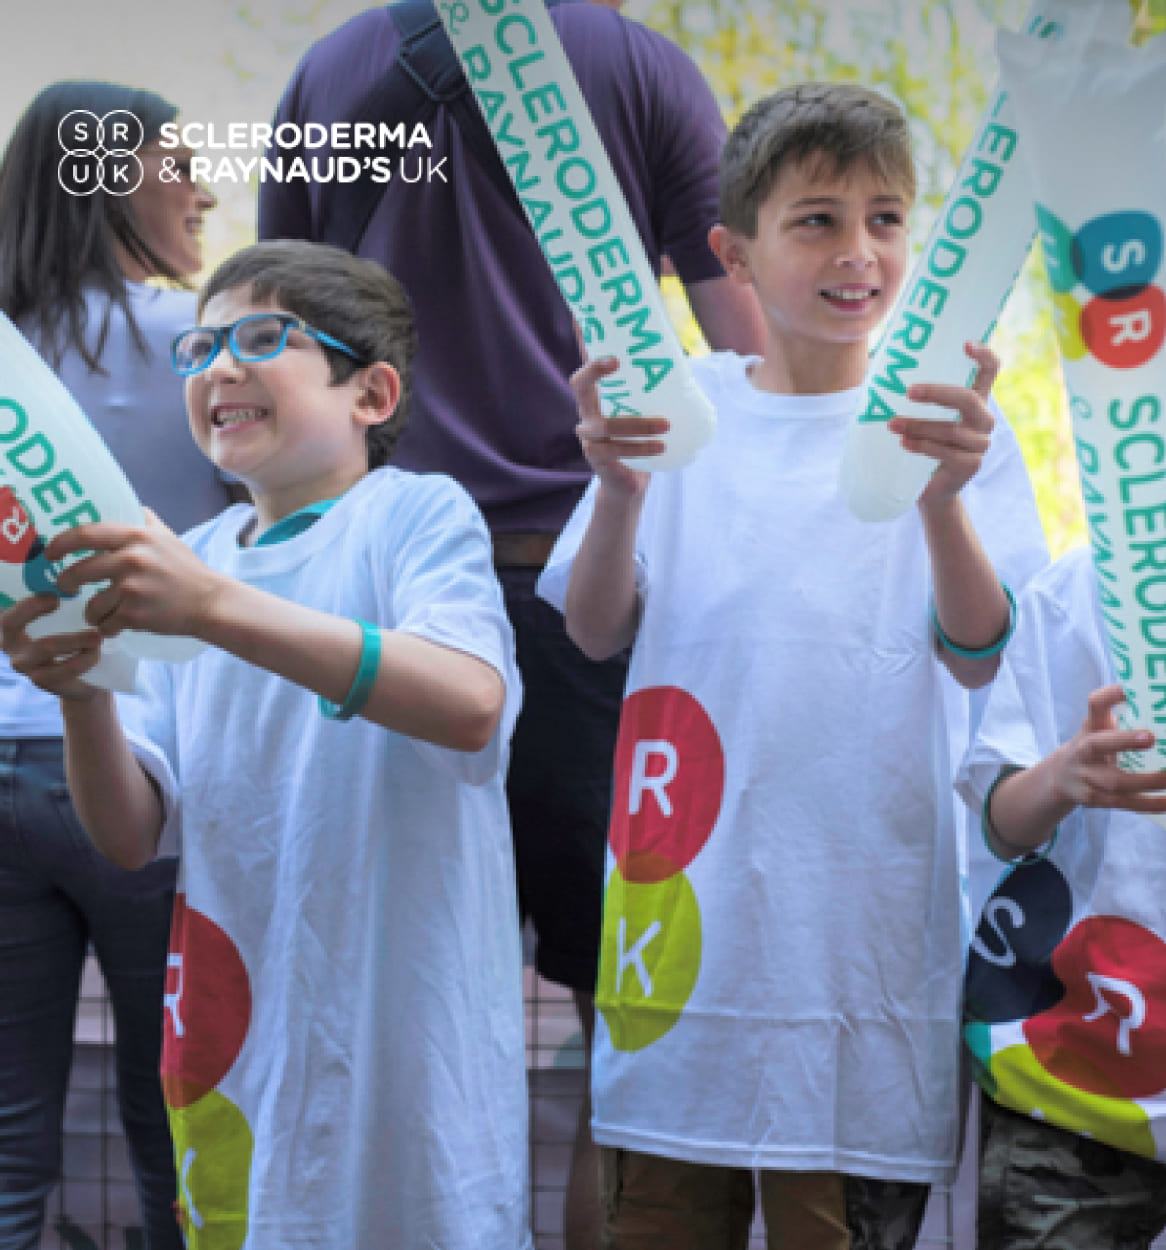 Crowd of children holding Scleroderma & Raynaud's UK branding.